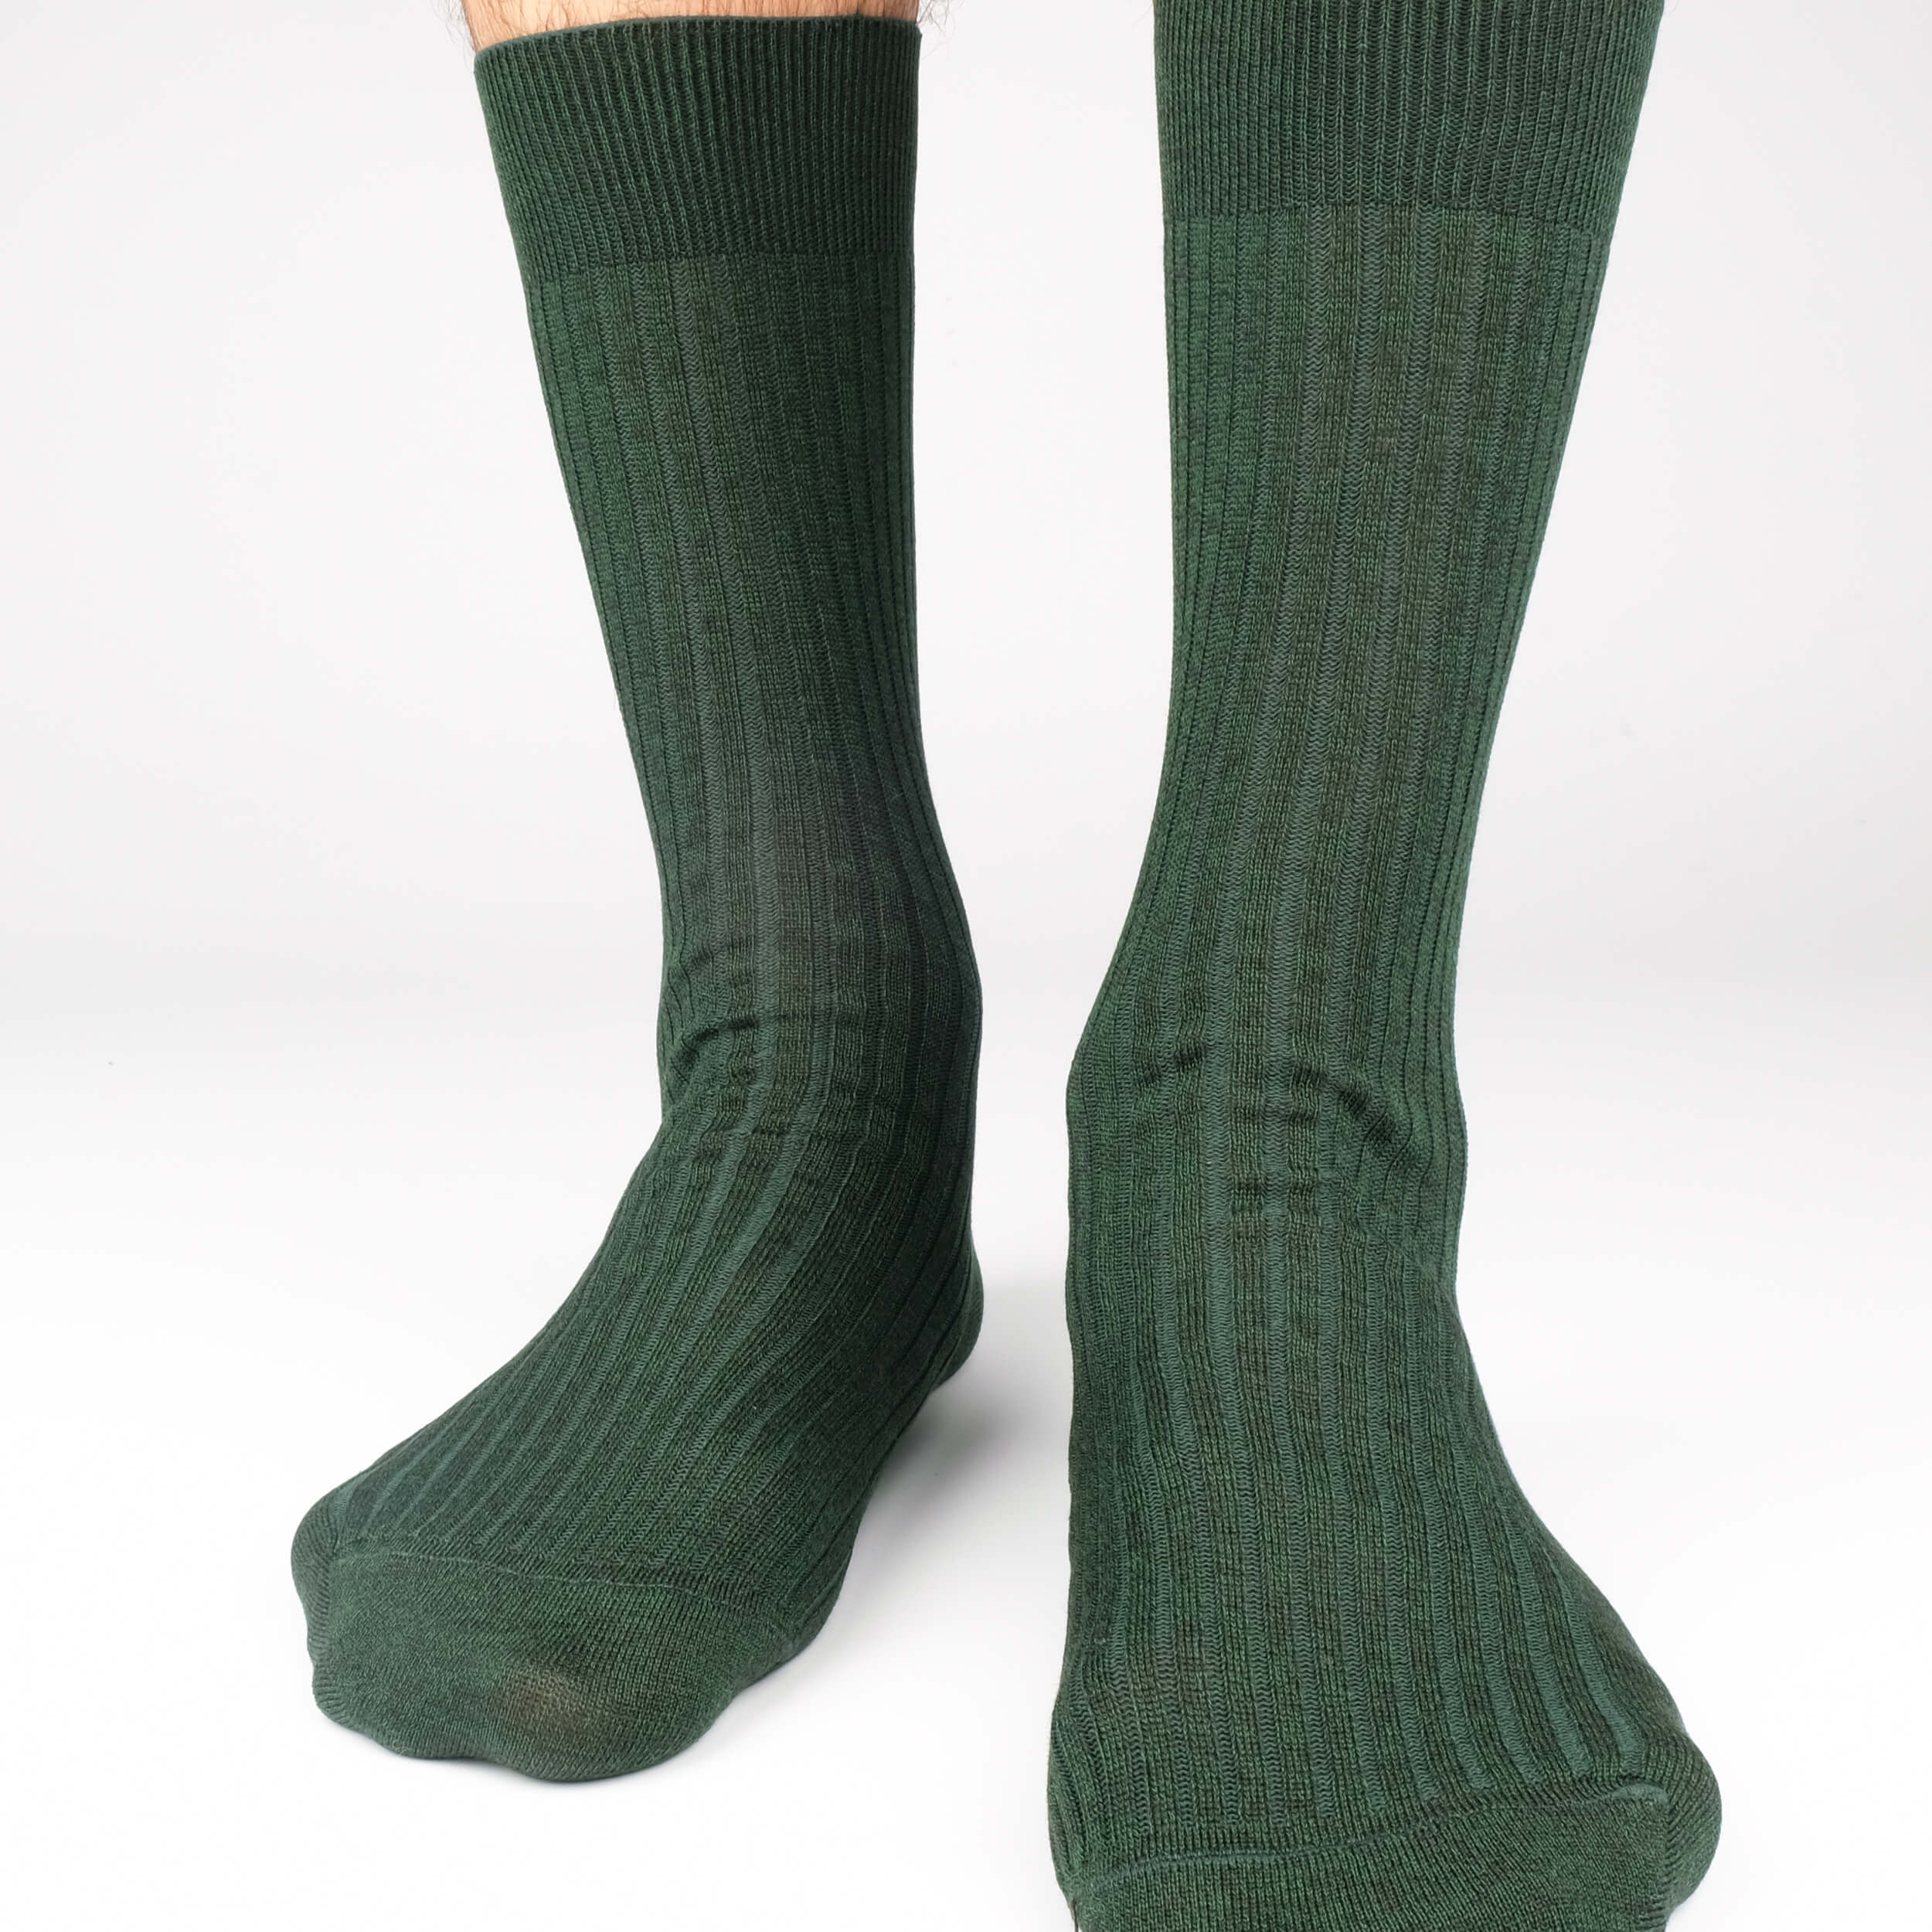 Mens Socks - Thousand Ribs Men's Socks - Green⎪Etiquette Clothiers